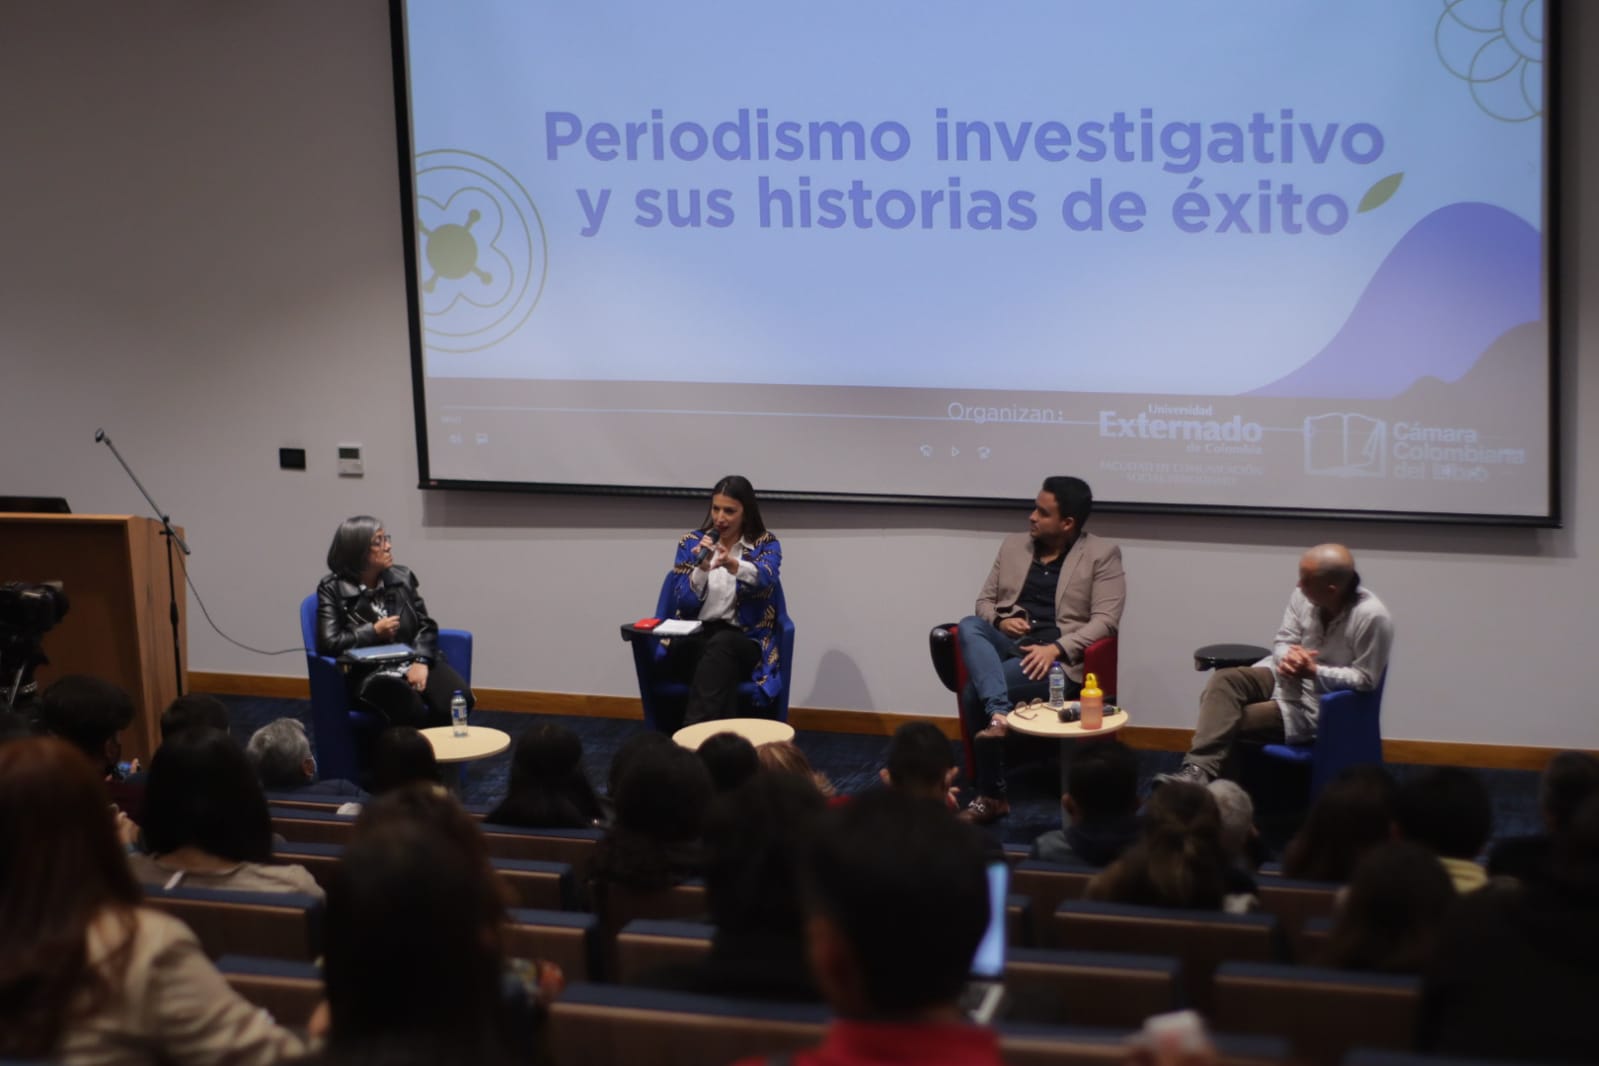 Periodismo investigativo. XIII Encuentro Internacional de Periodismo